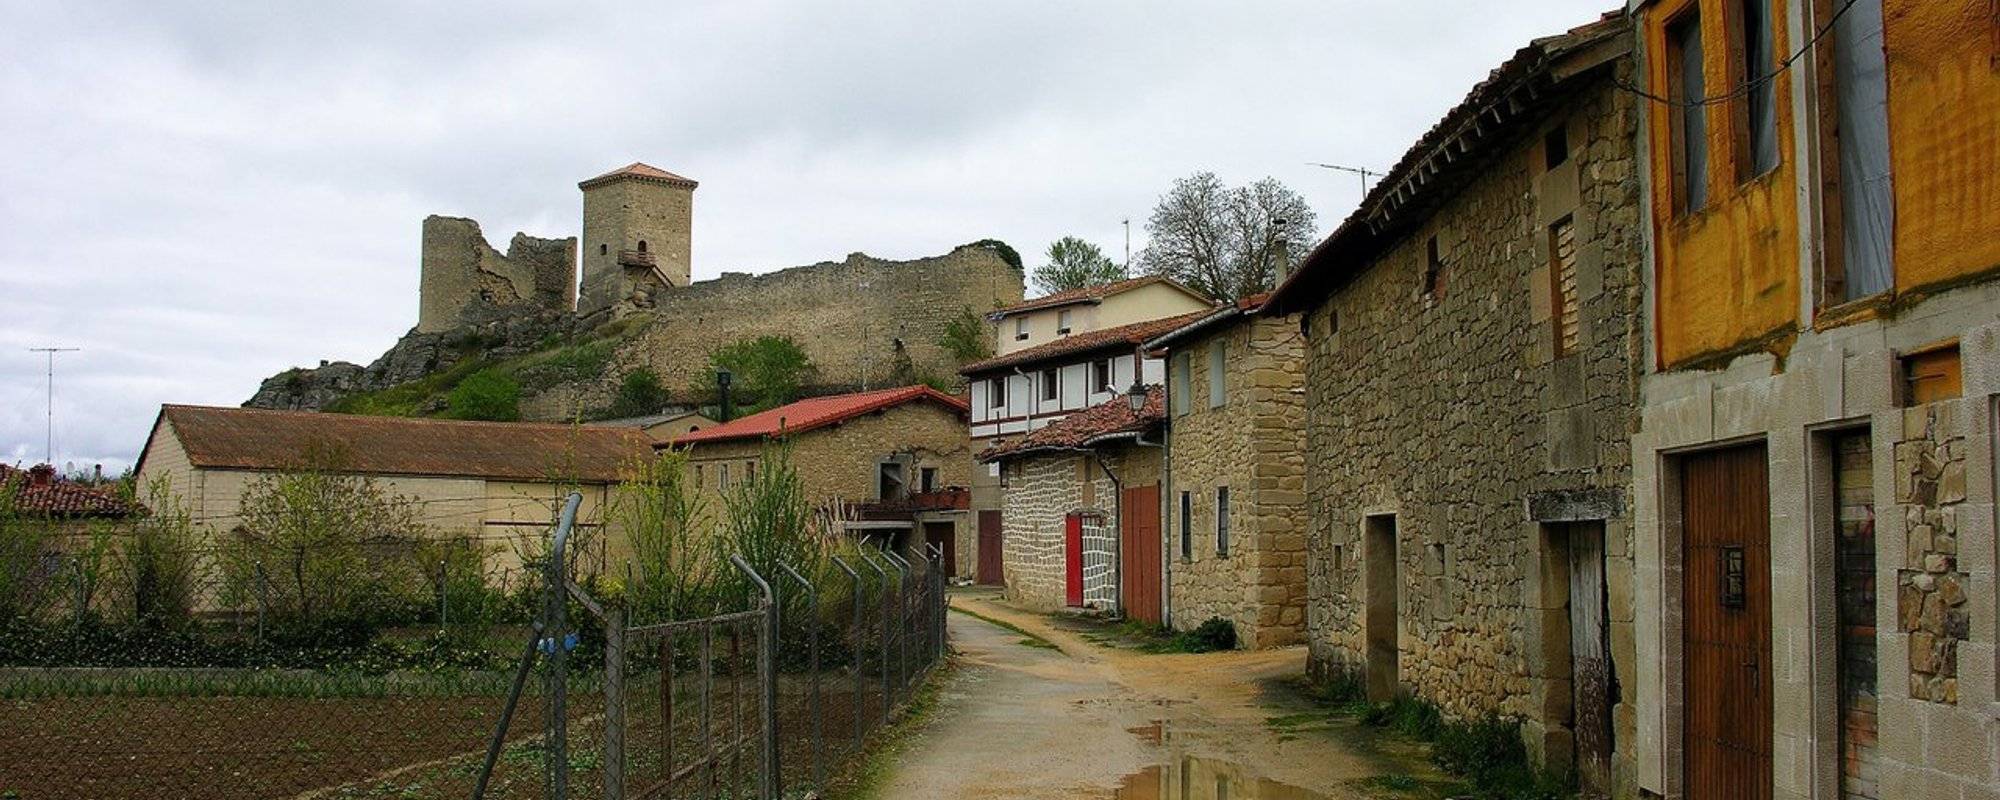 Villages with Art and Mystery: Santa Gadea del Cid, Burgos